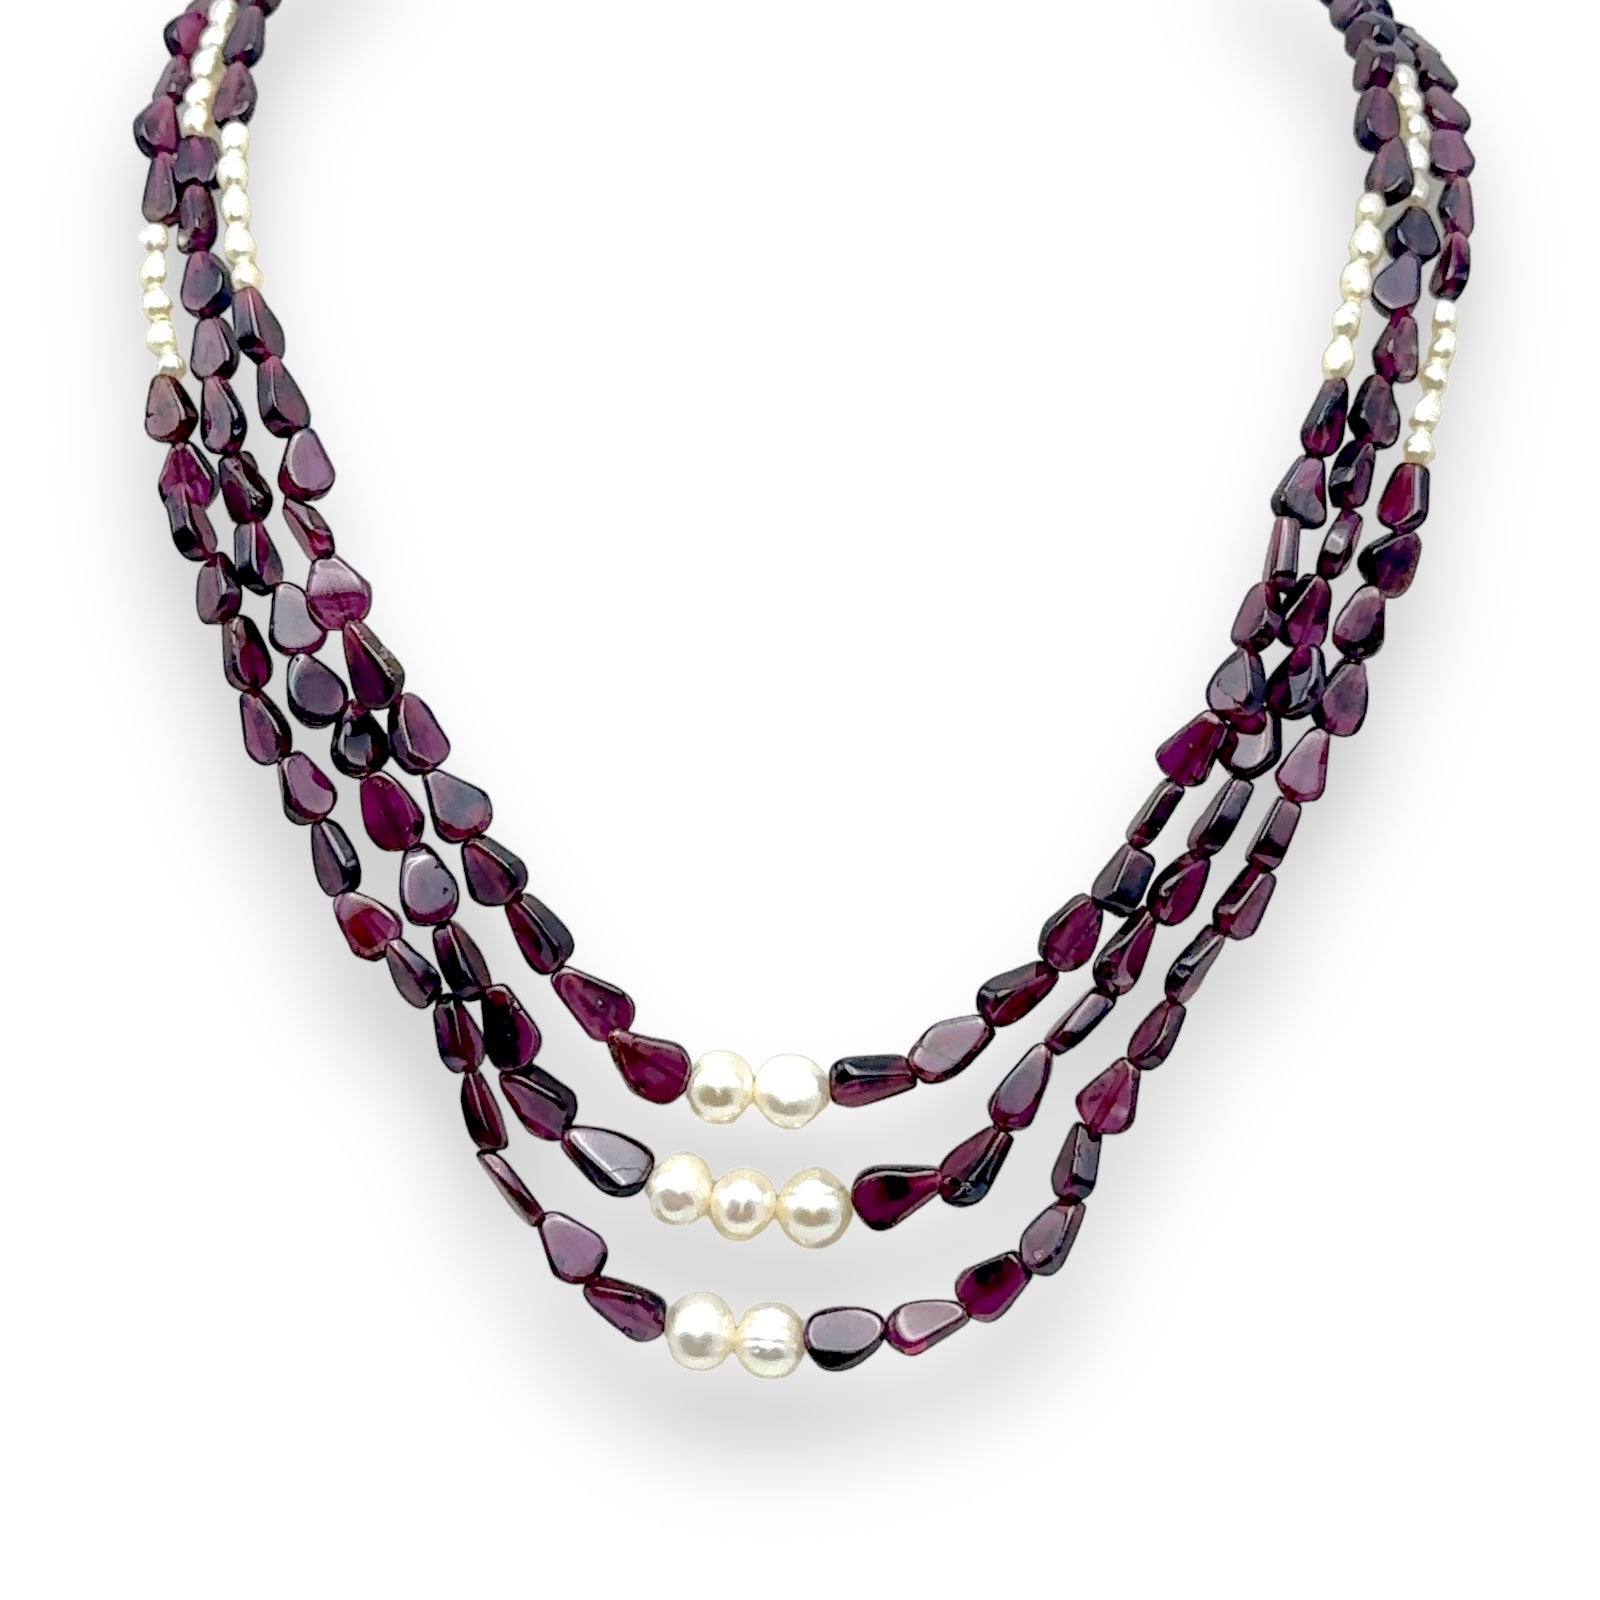 Natural Handmade Necklace Layered Pear Garnet Pearls Gemstone Beads Jewellery